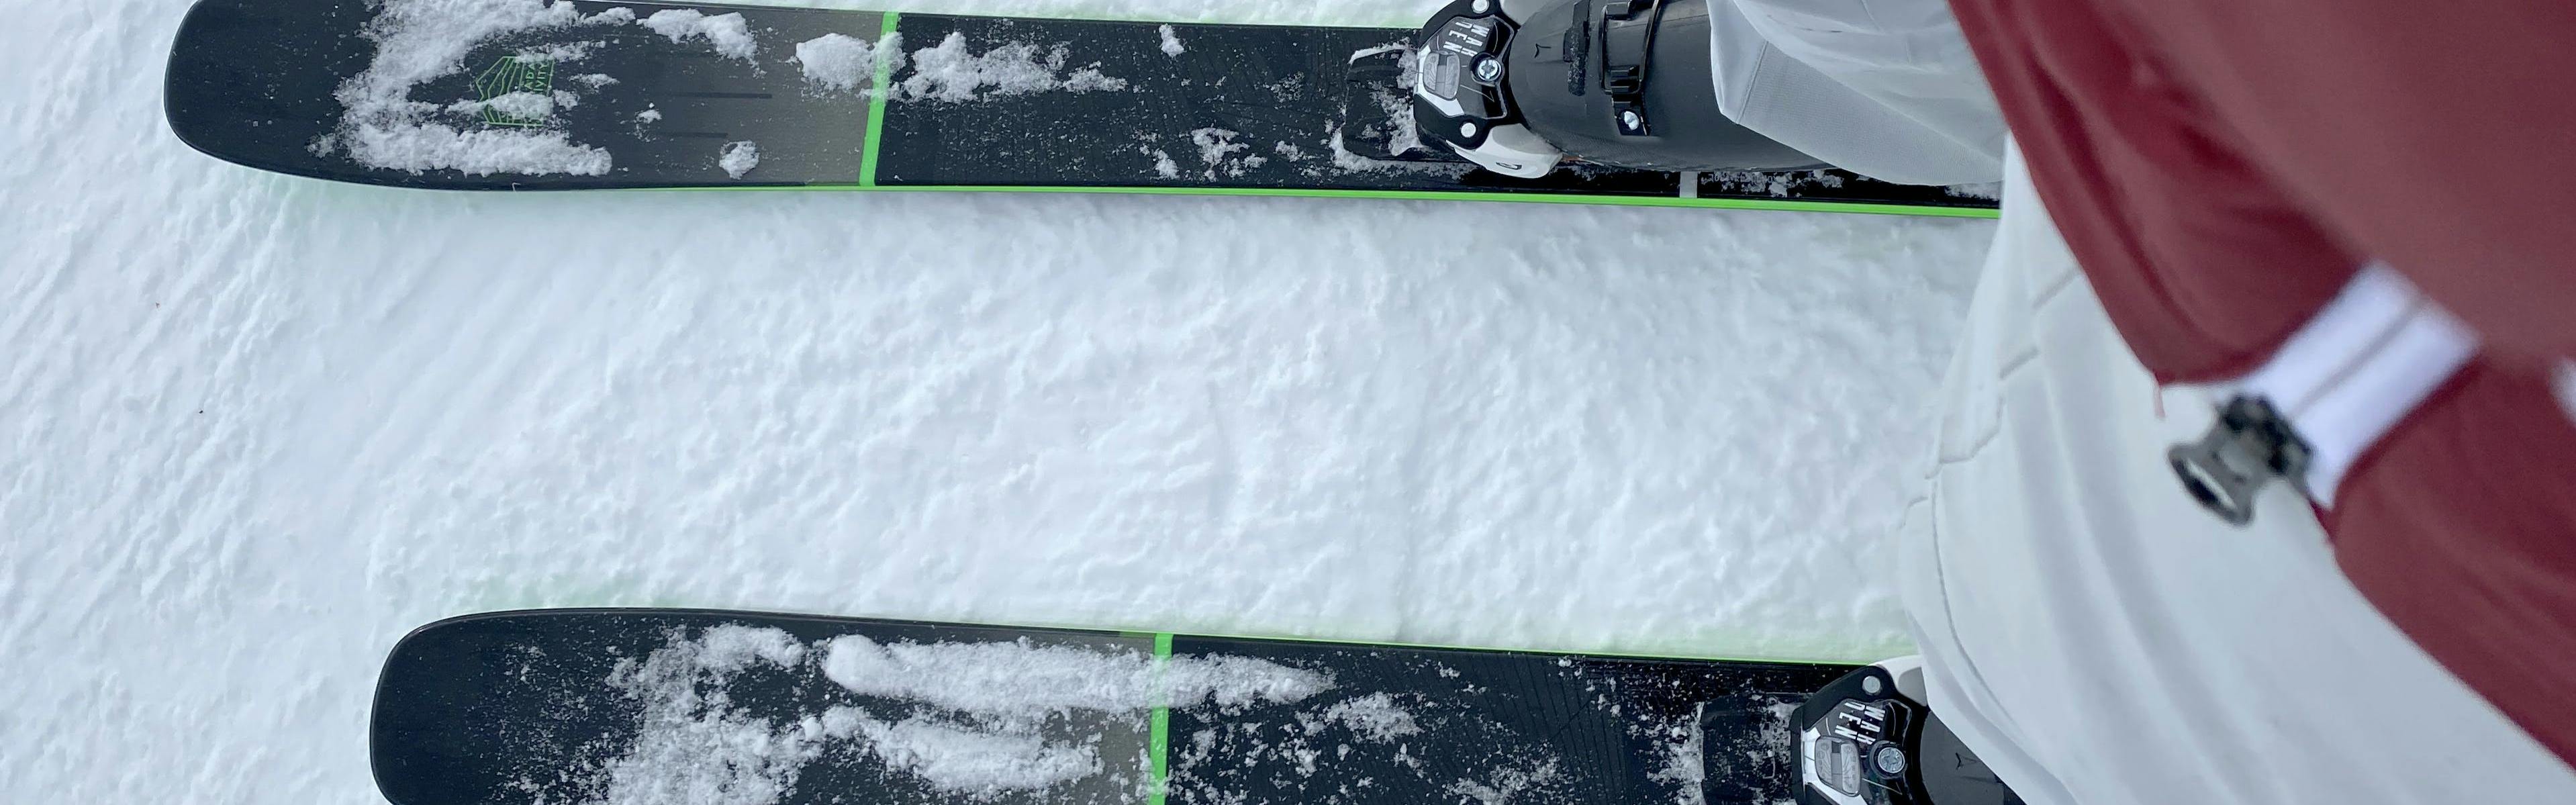 The Armada Declivity 92 TI Skis on snow. 